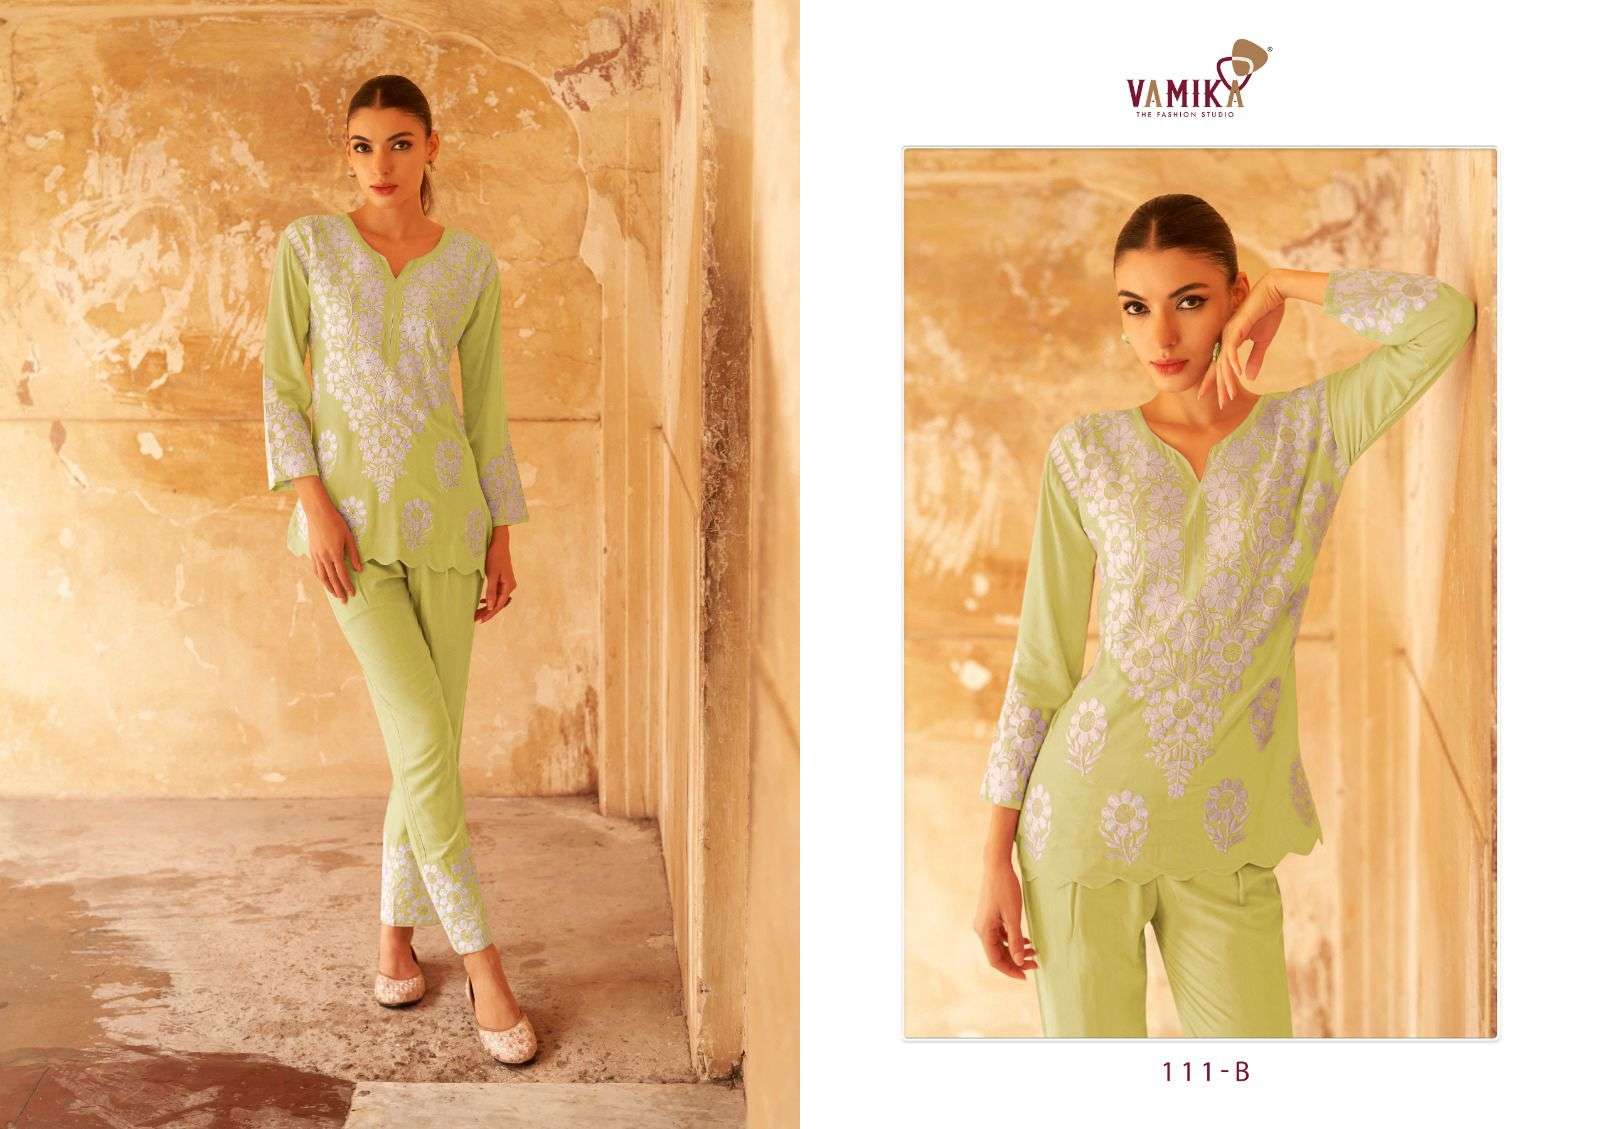 Veronica Vol 2 Buy Vamika Wholesale Online Latest Rayon Designer Kurtis & Pant Sets